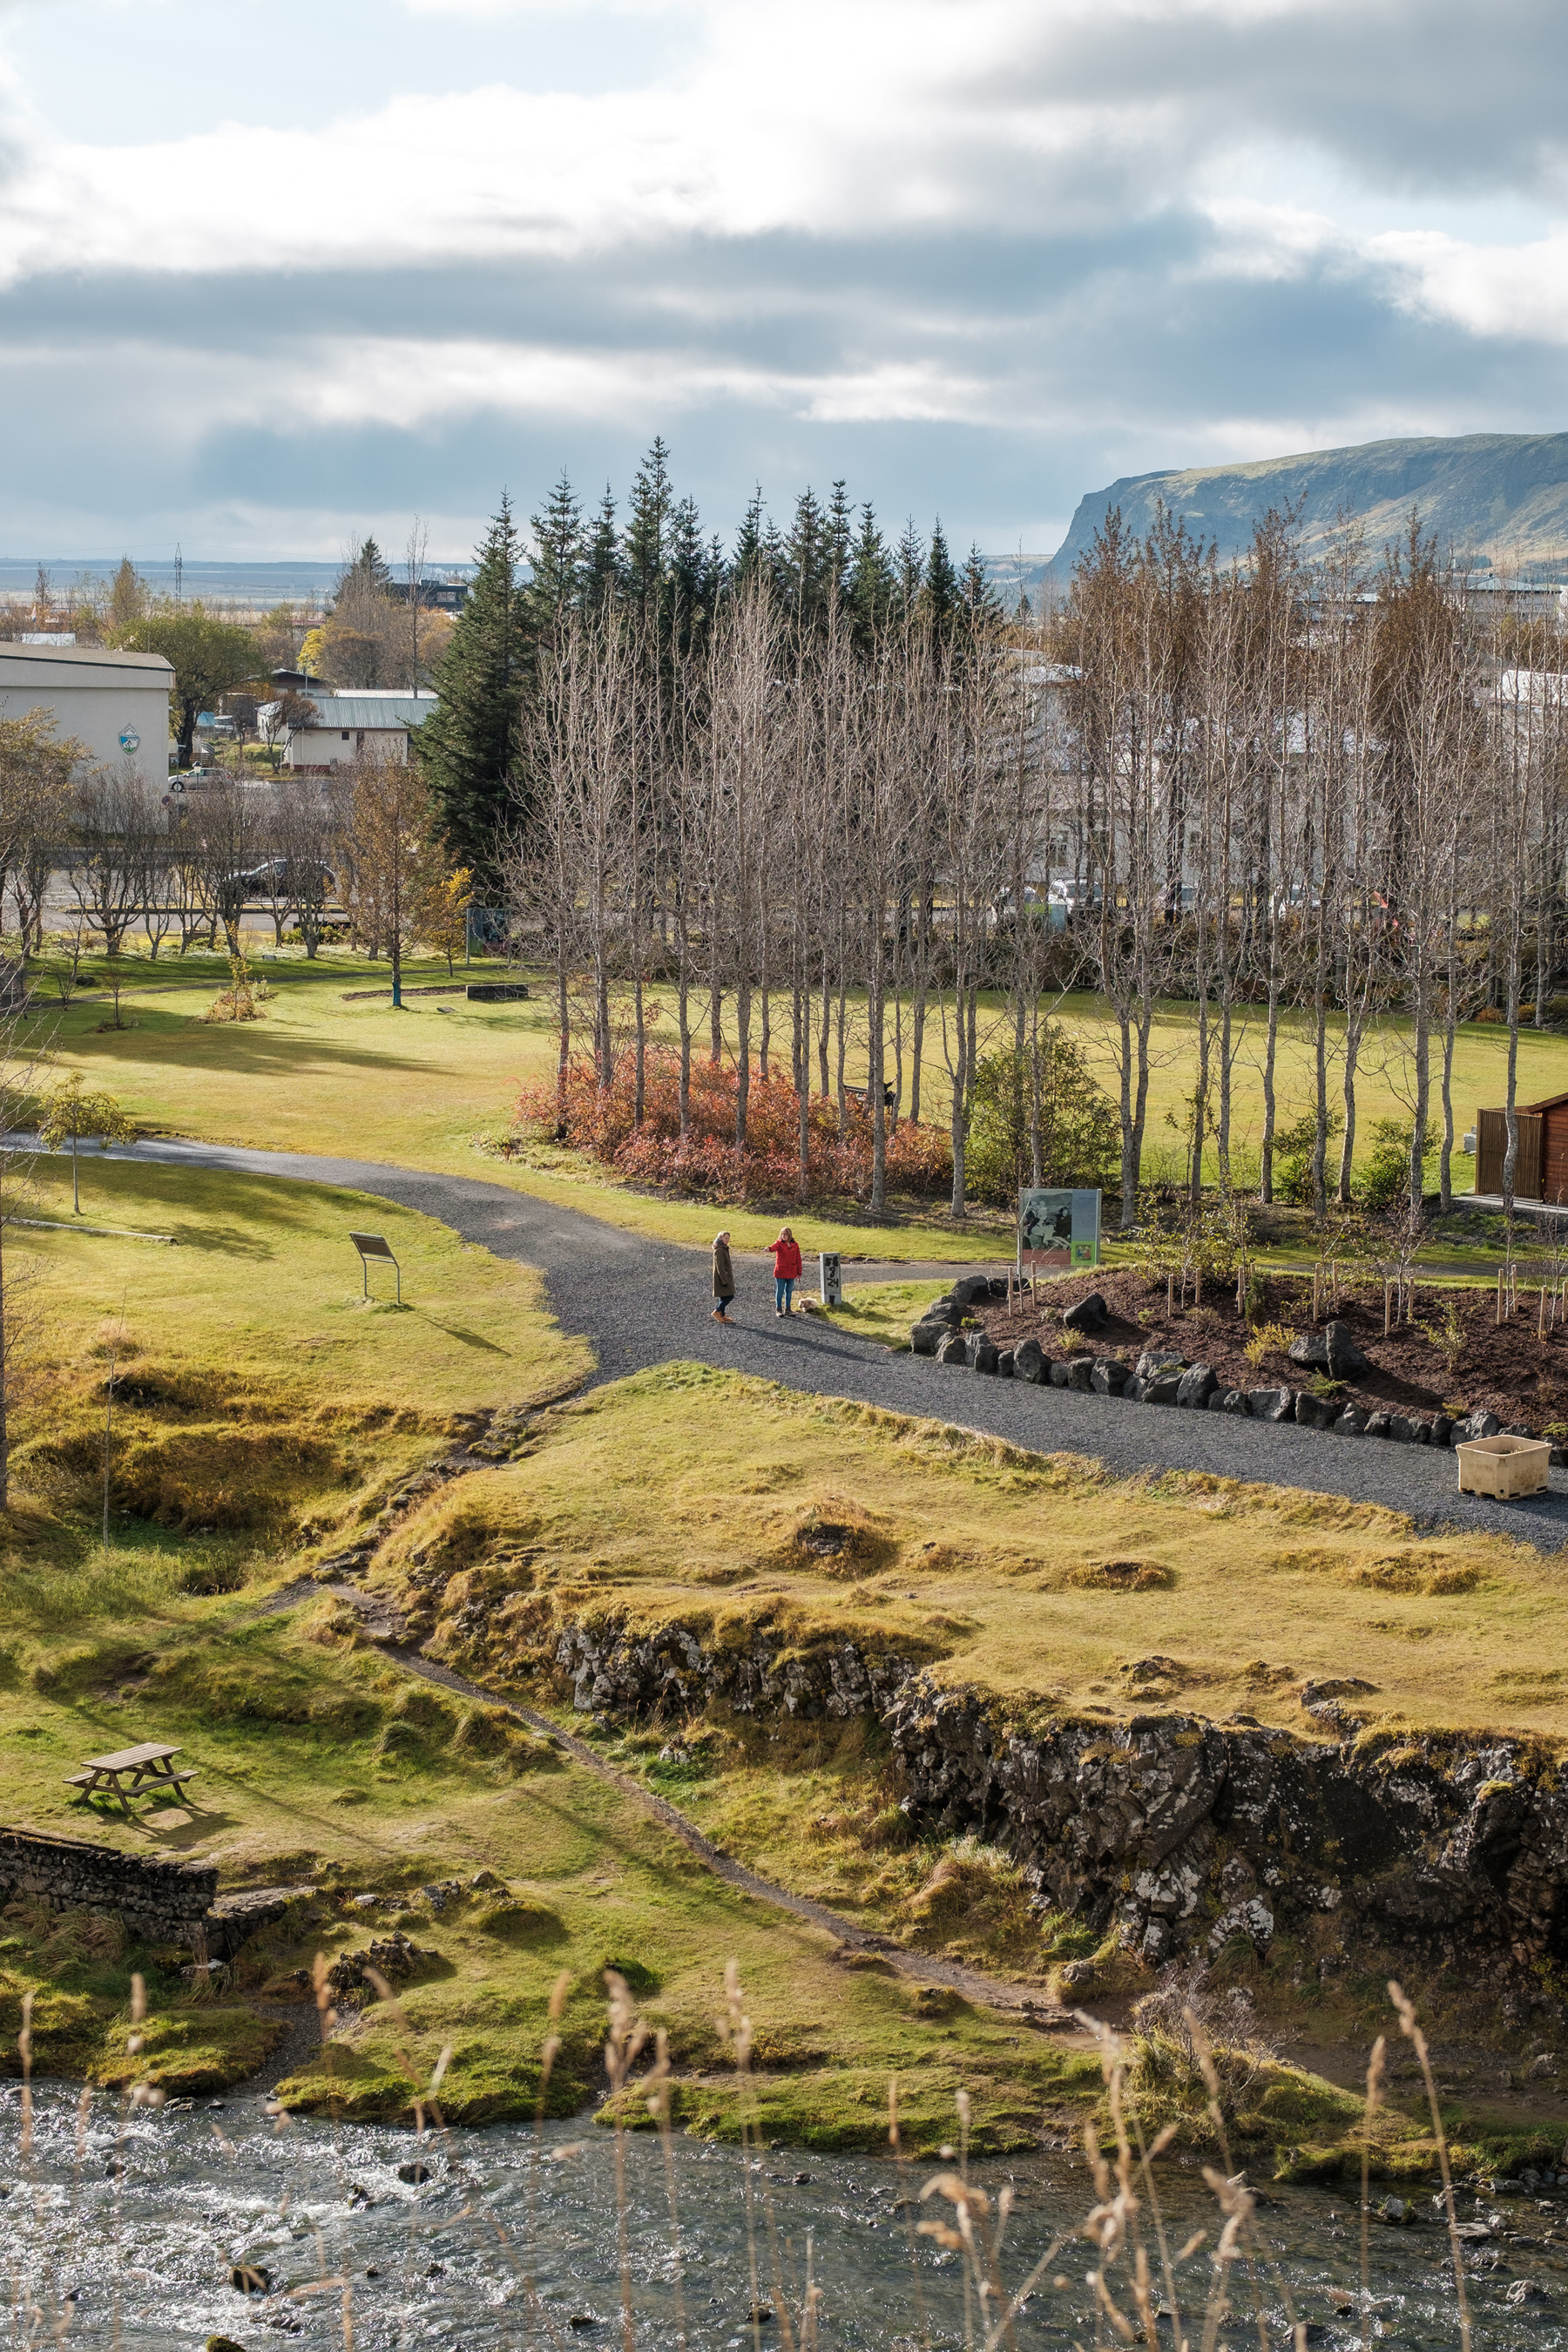 Two people walk through Hveragerði's tiny park